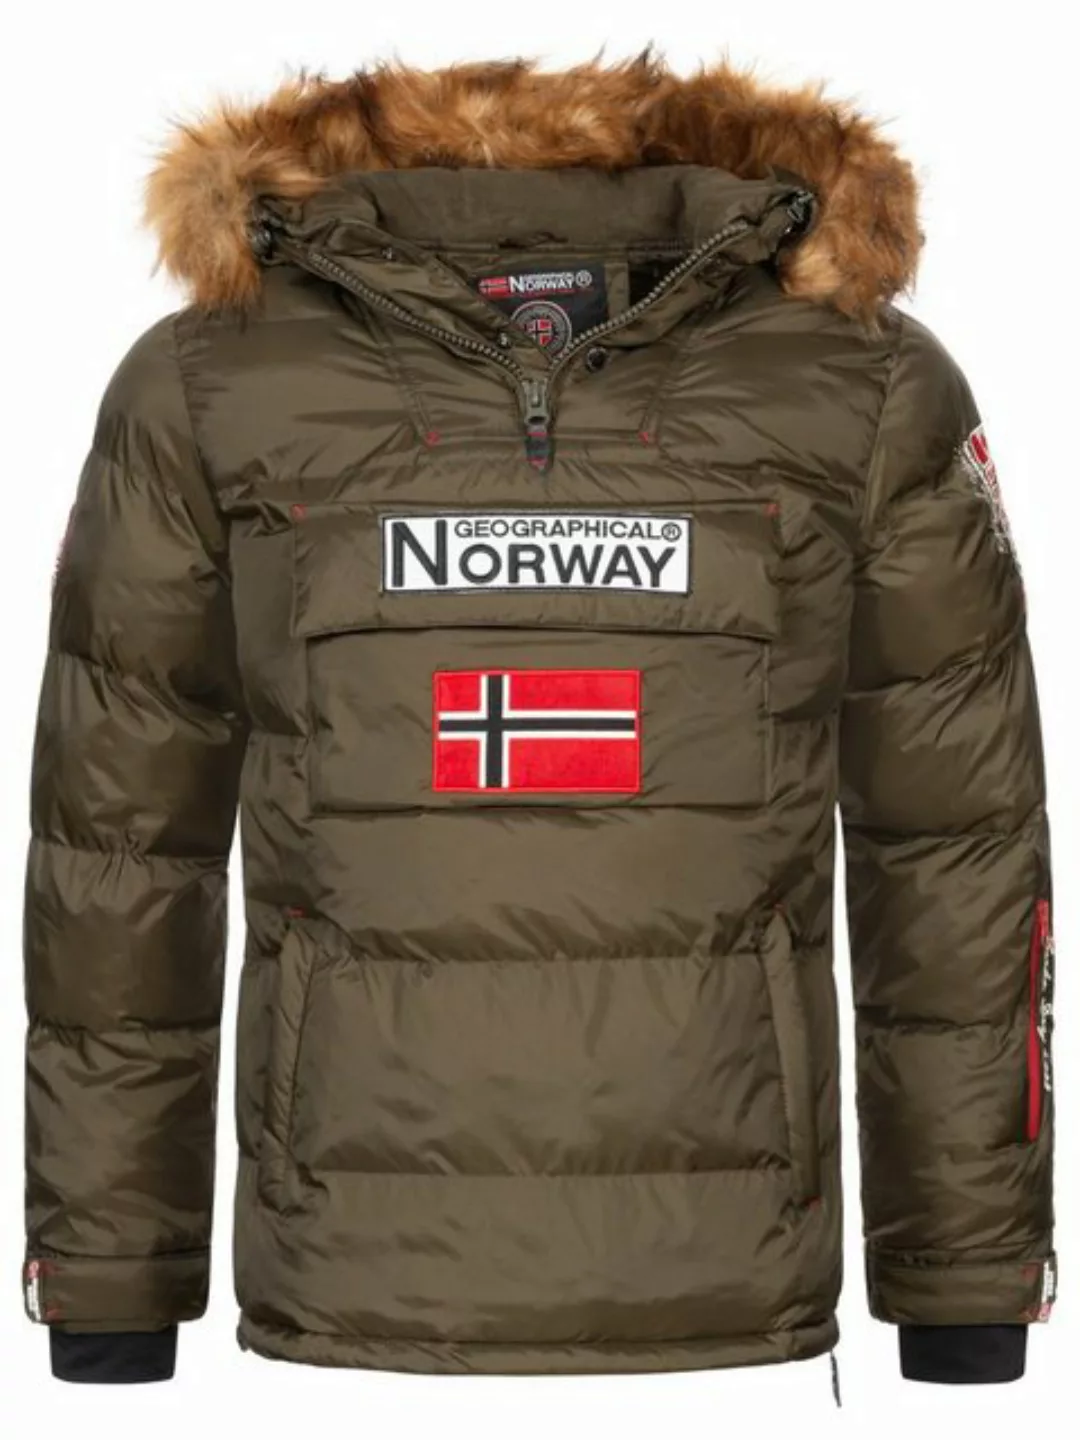 Geographical Norway Winterjacke Herren Jacke Windbreaker Anorak H-365 günstig online kaufen